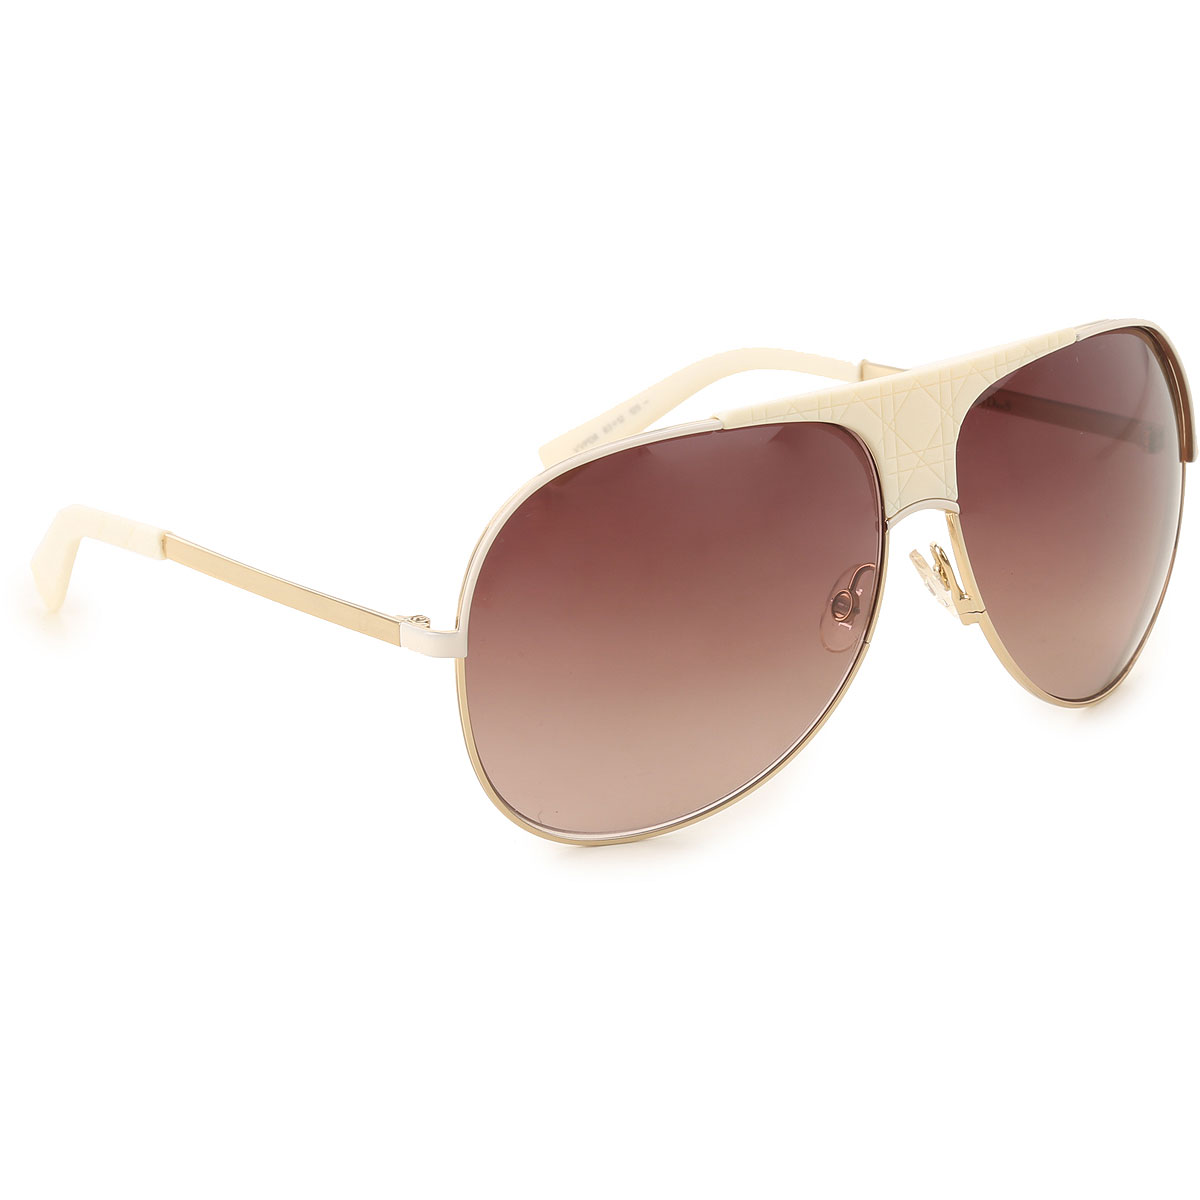 Sunglasses Christian Dior, Style code: myladydior8-vvpd8-N38